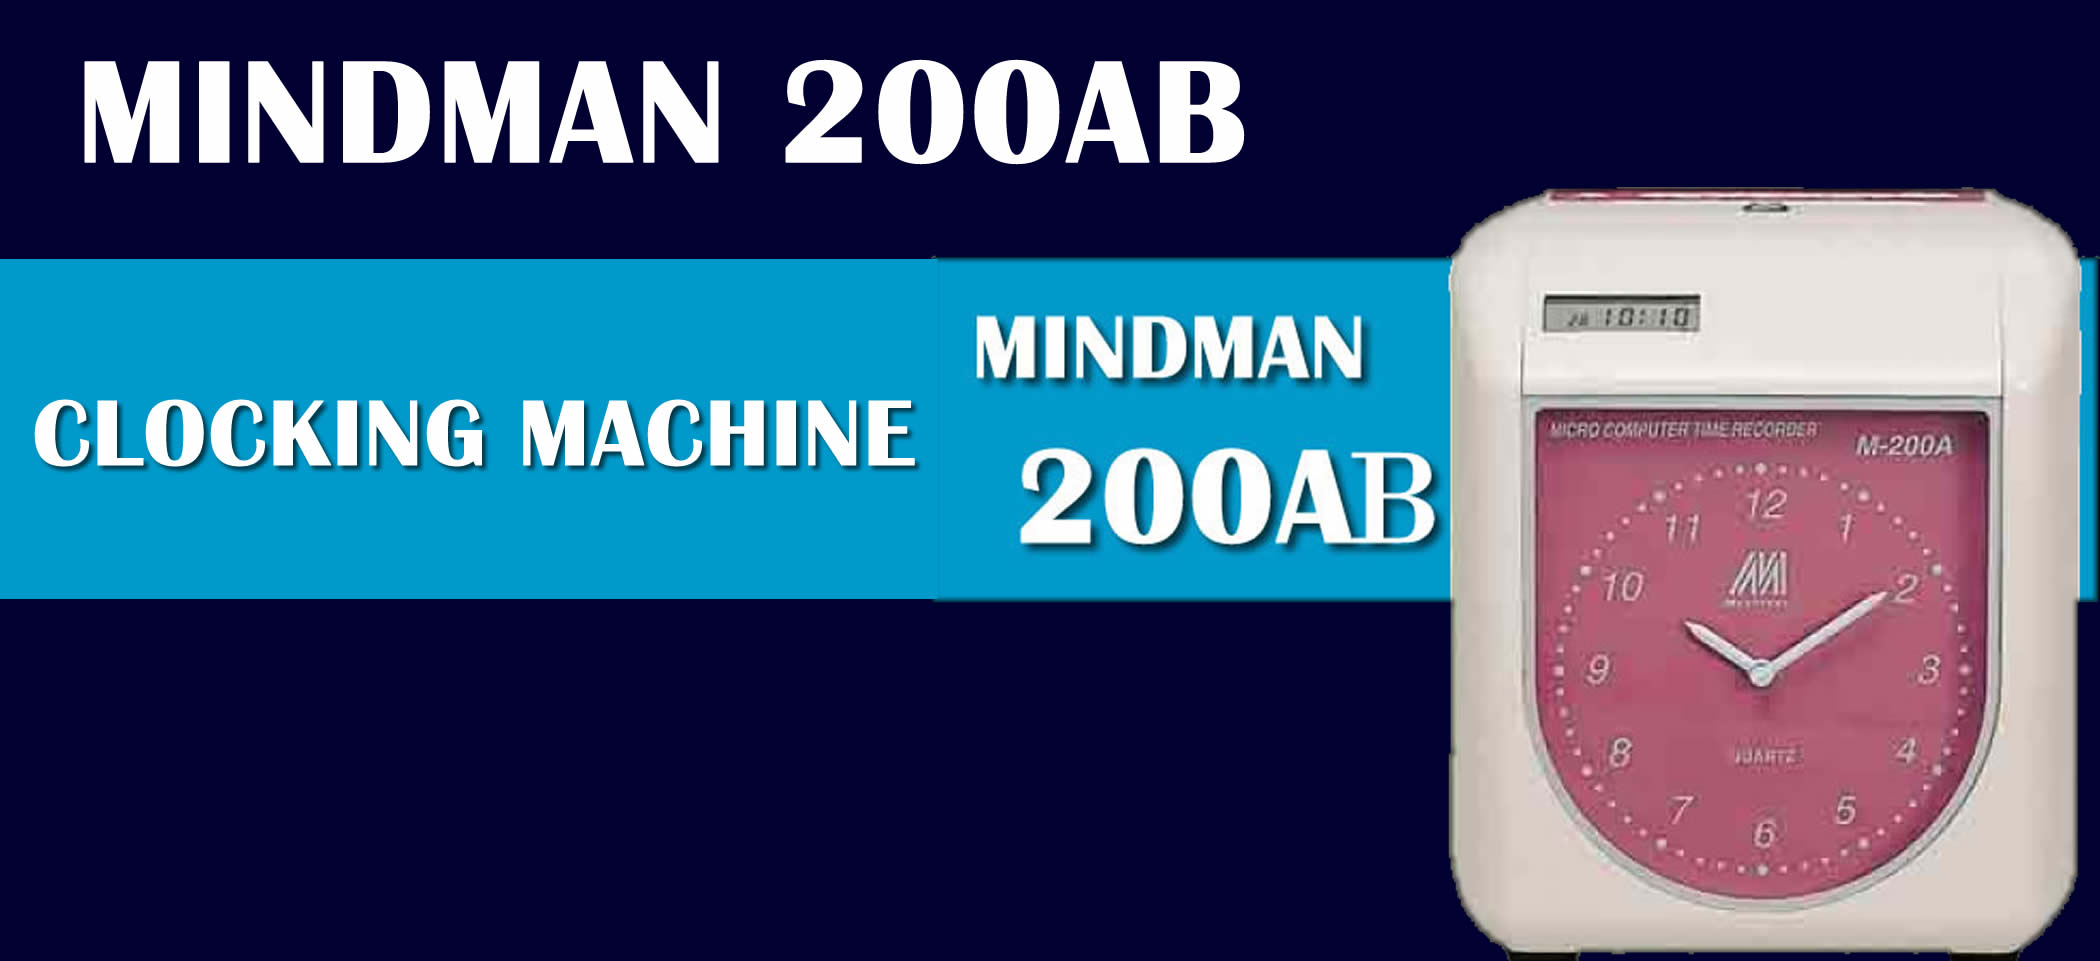 clocking-machine-mindman 200ab Banner